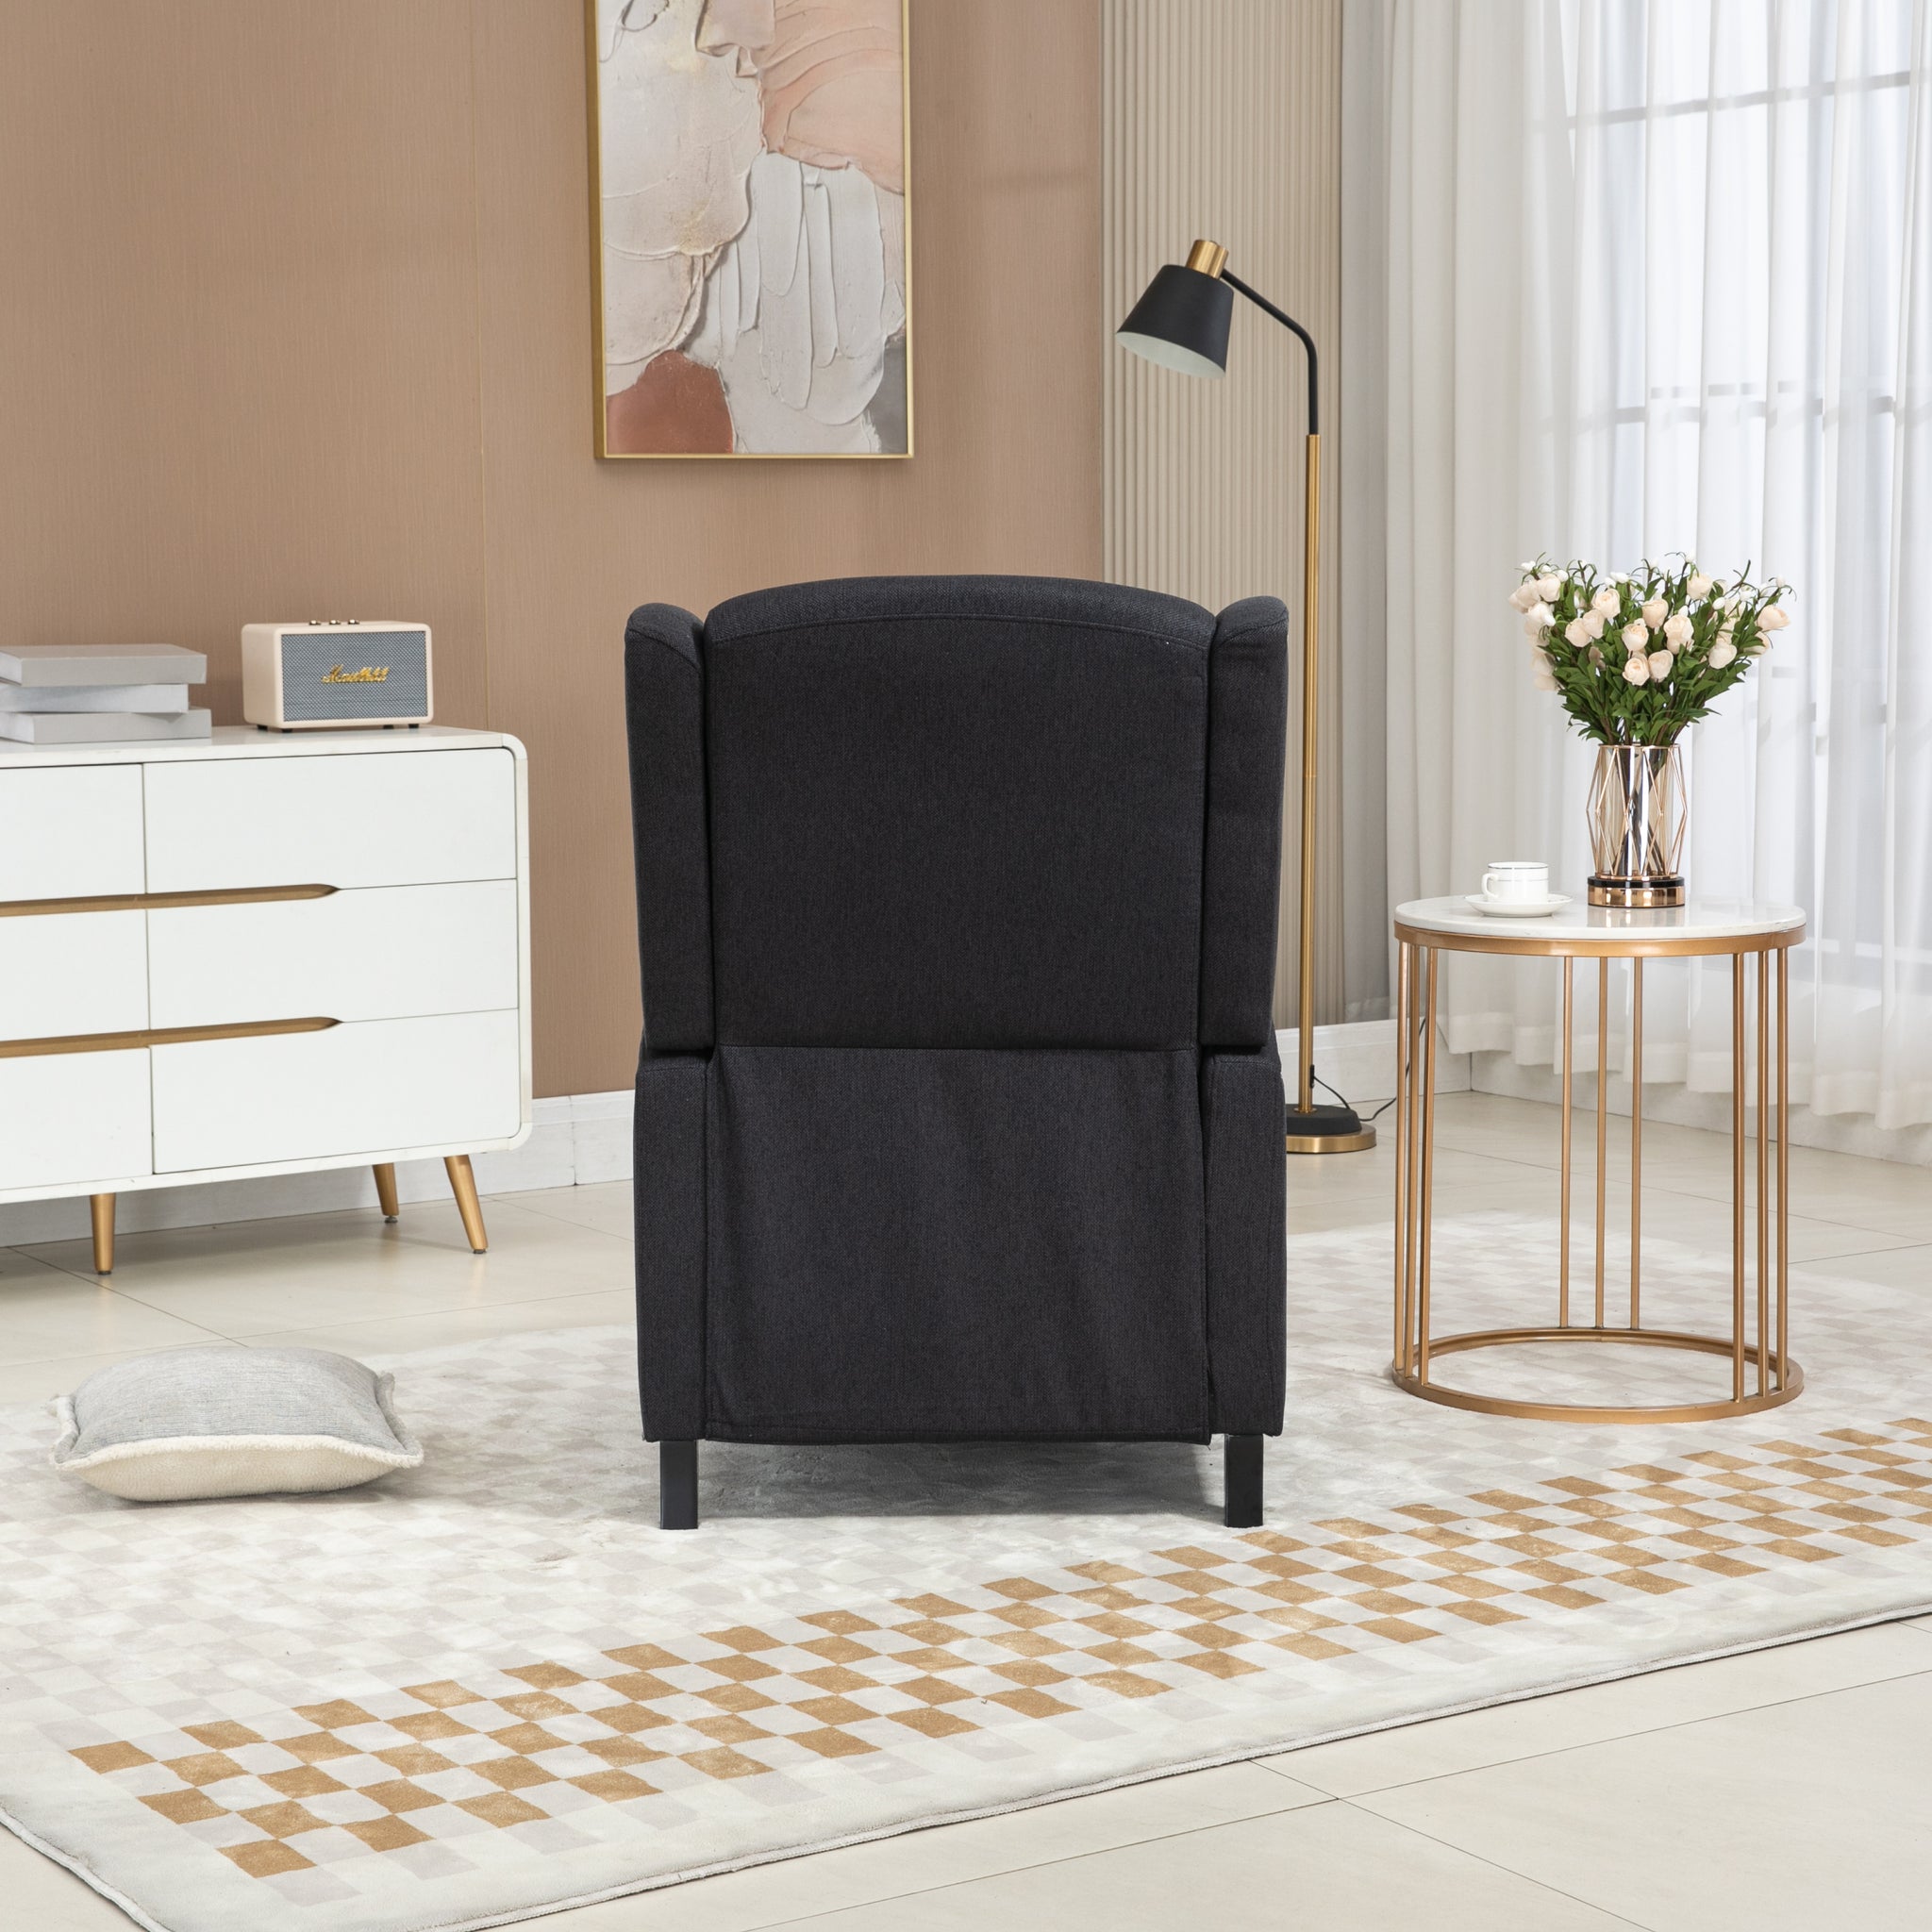 COOLMORE Modern Comfortable Upholstered leisure chair black-linen